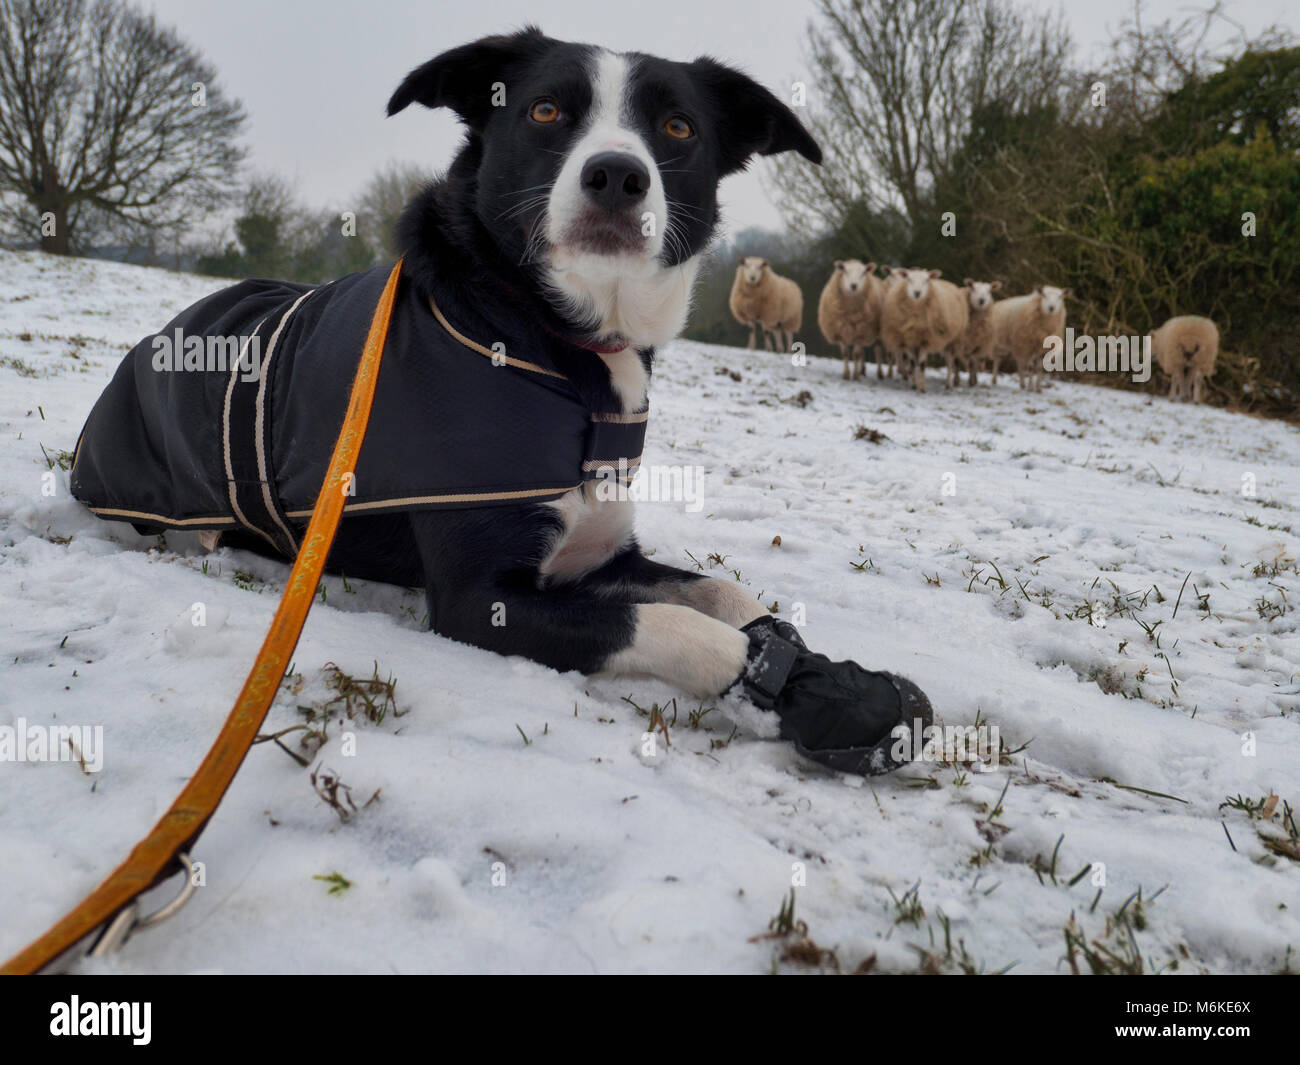 dog snow boots uk